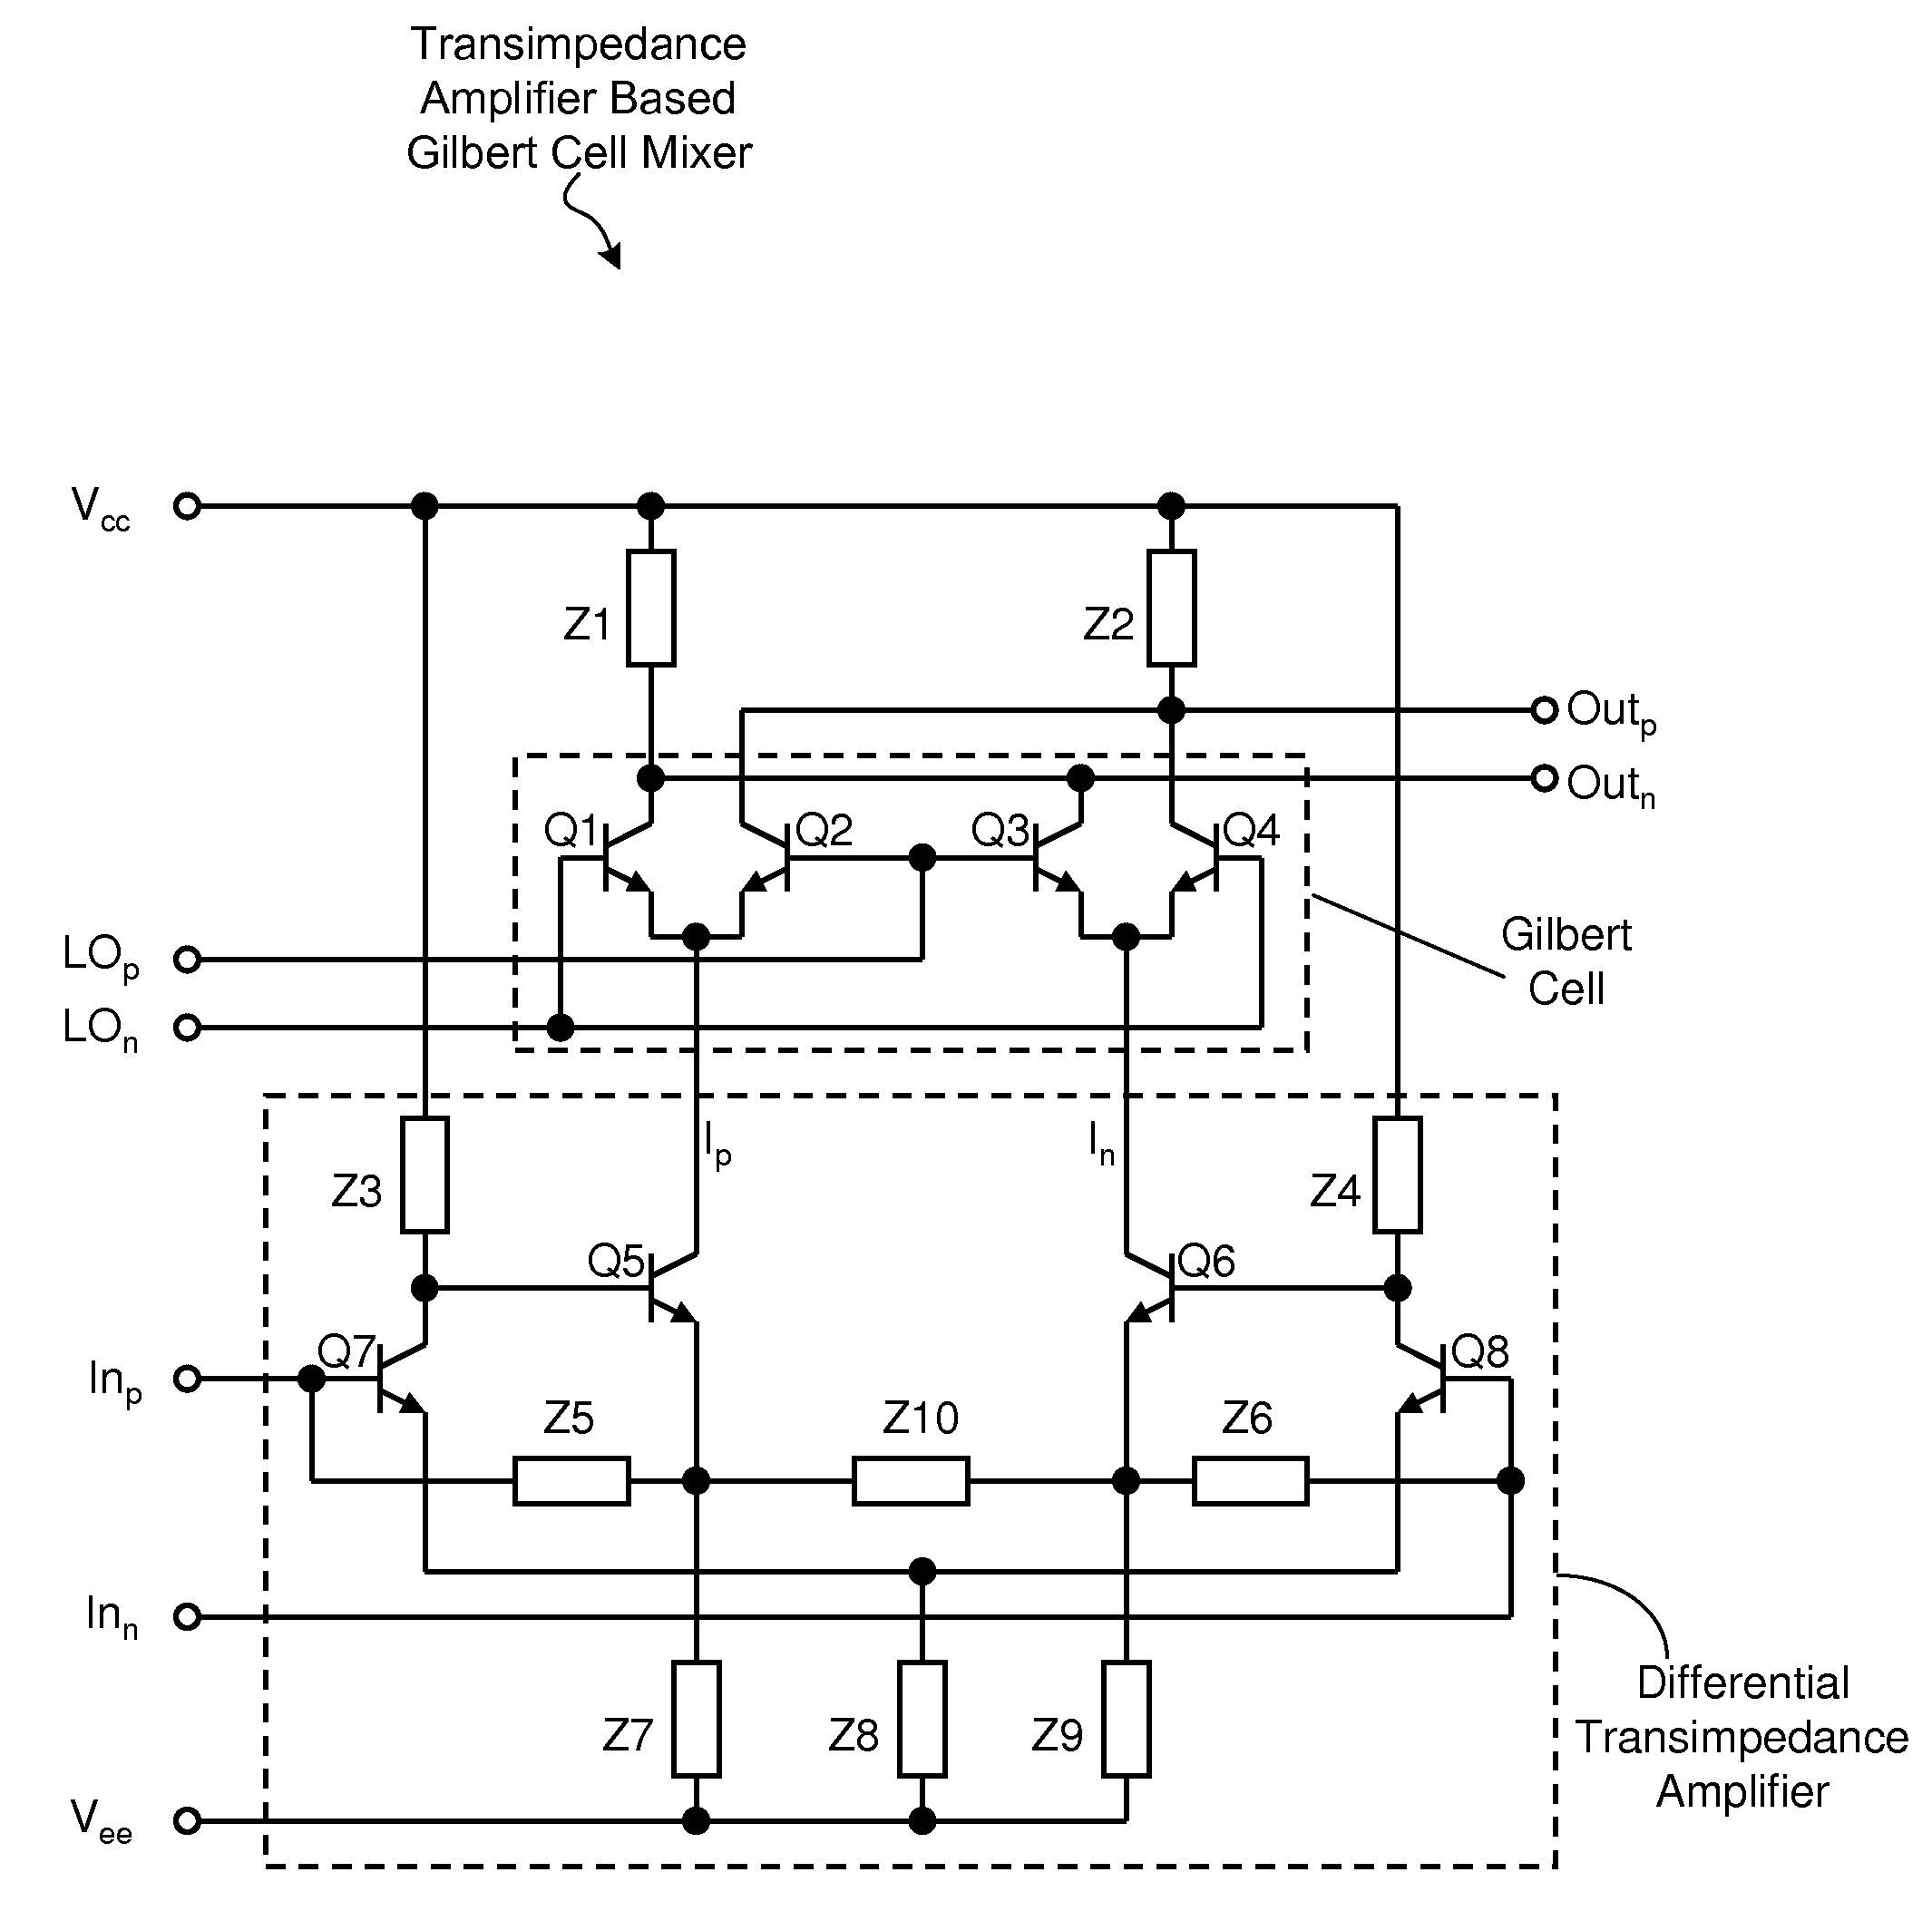 Transimpedance amplifier input stage mixer